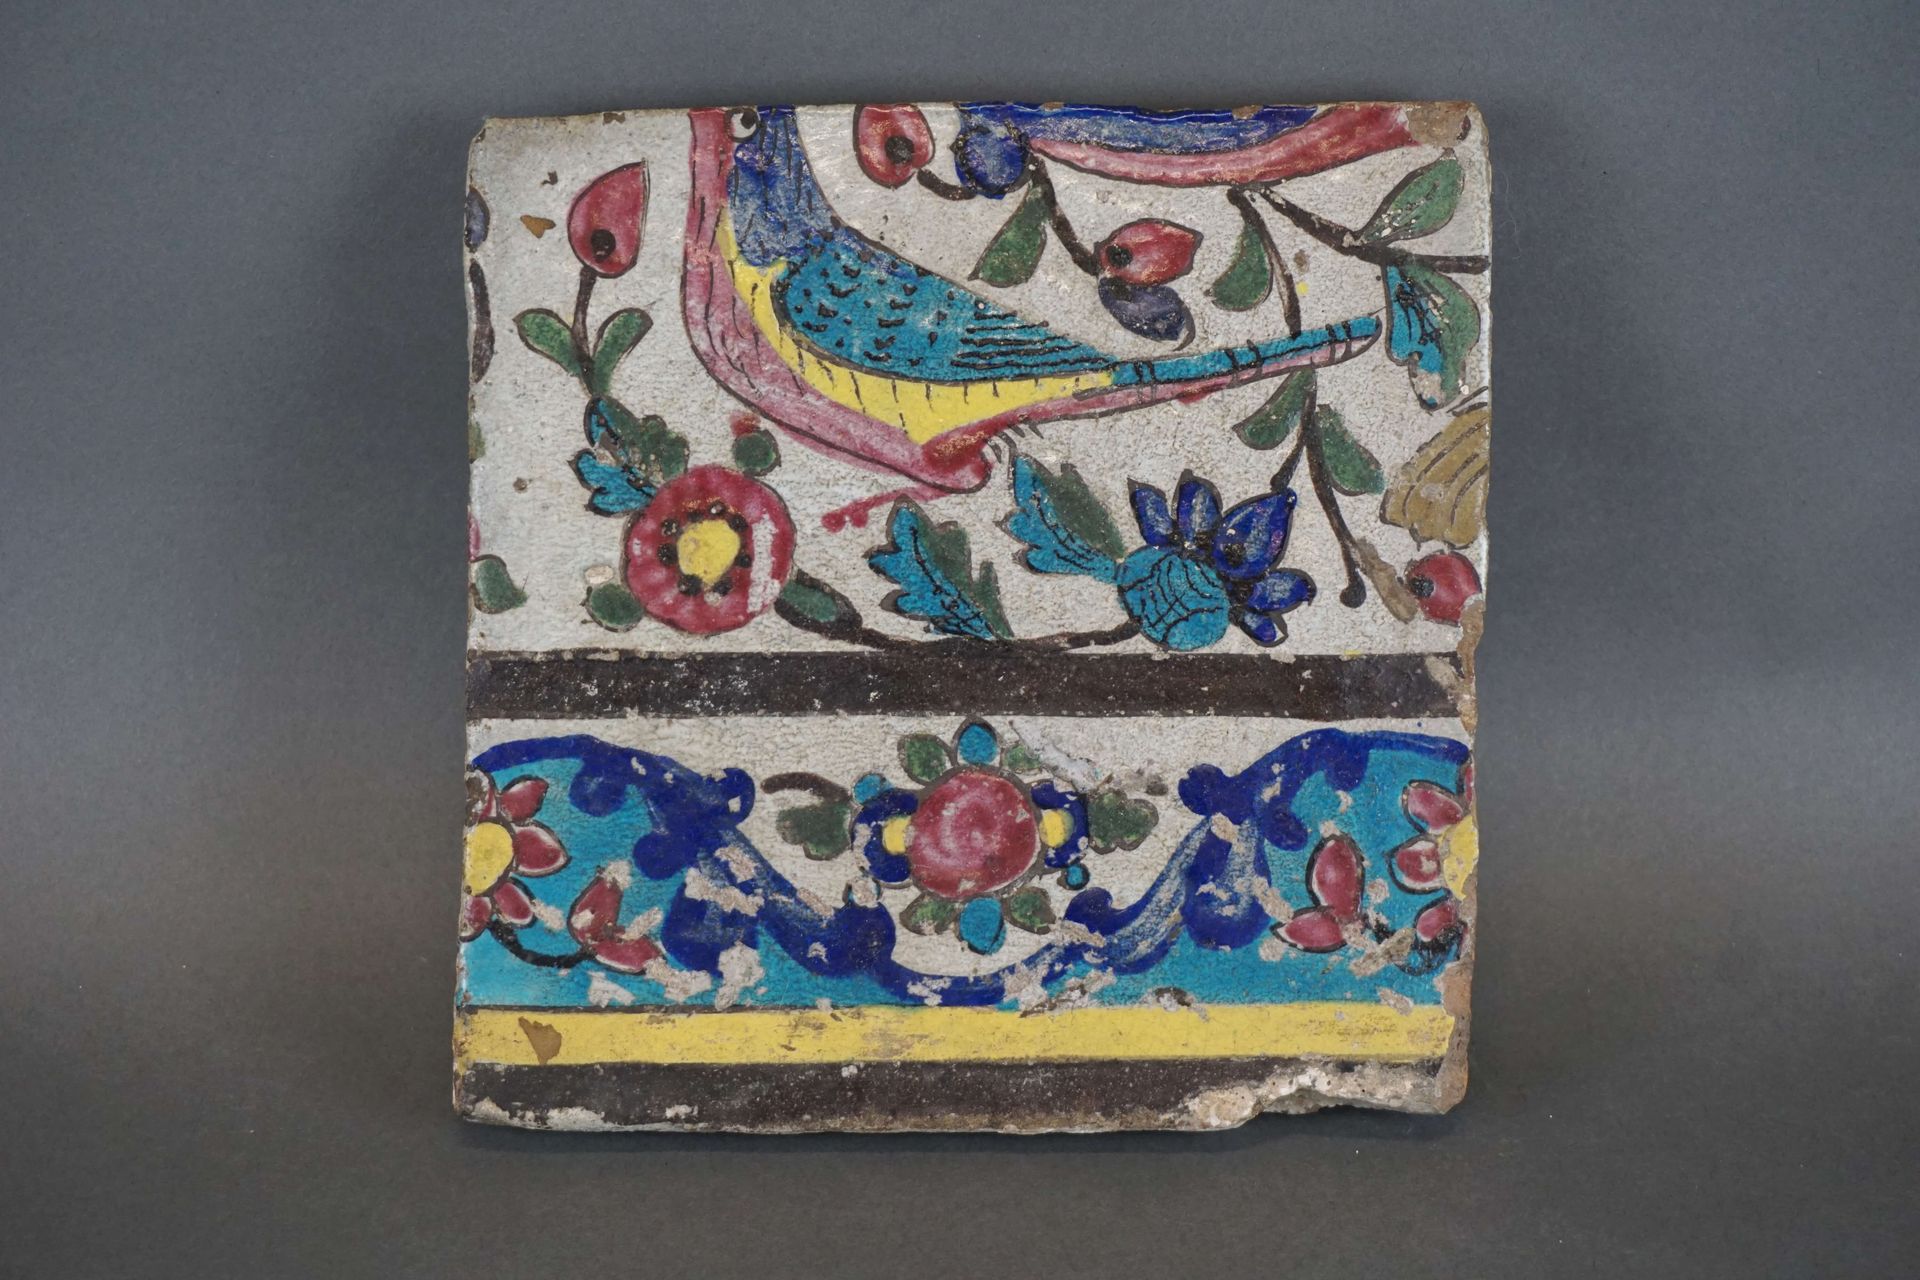 Null Irán. Azulejos de cerámica policromada. Accidentes. 20x20 cm